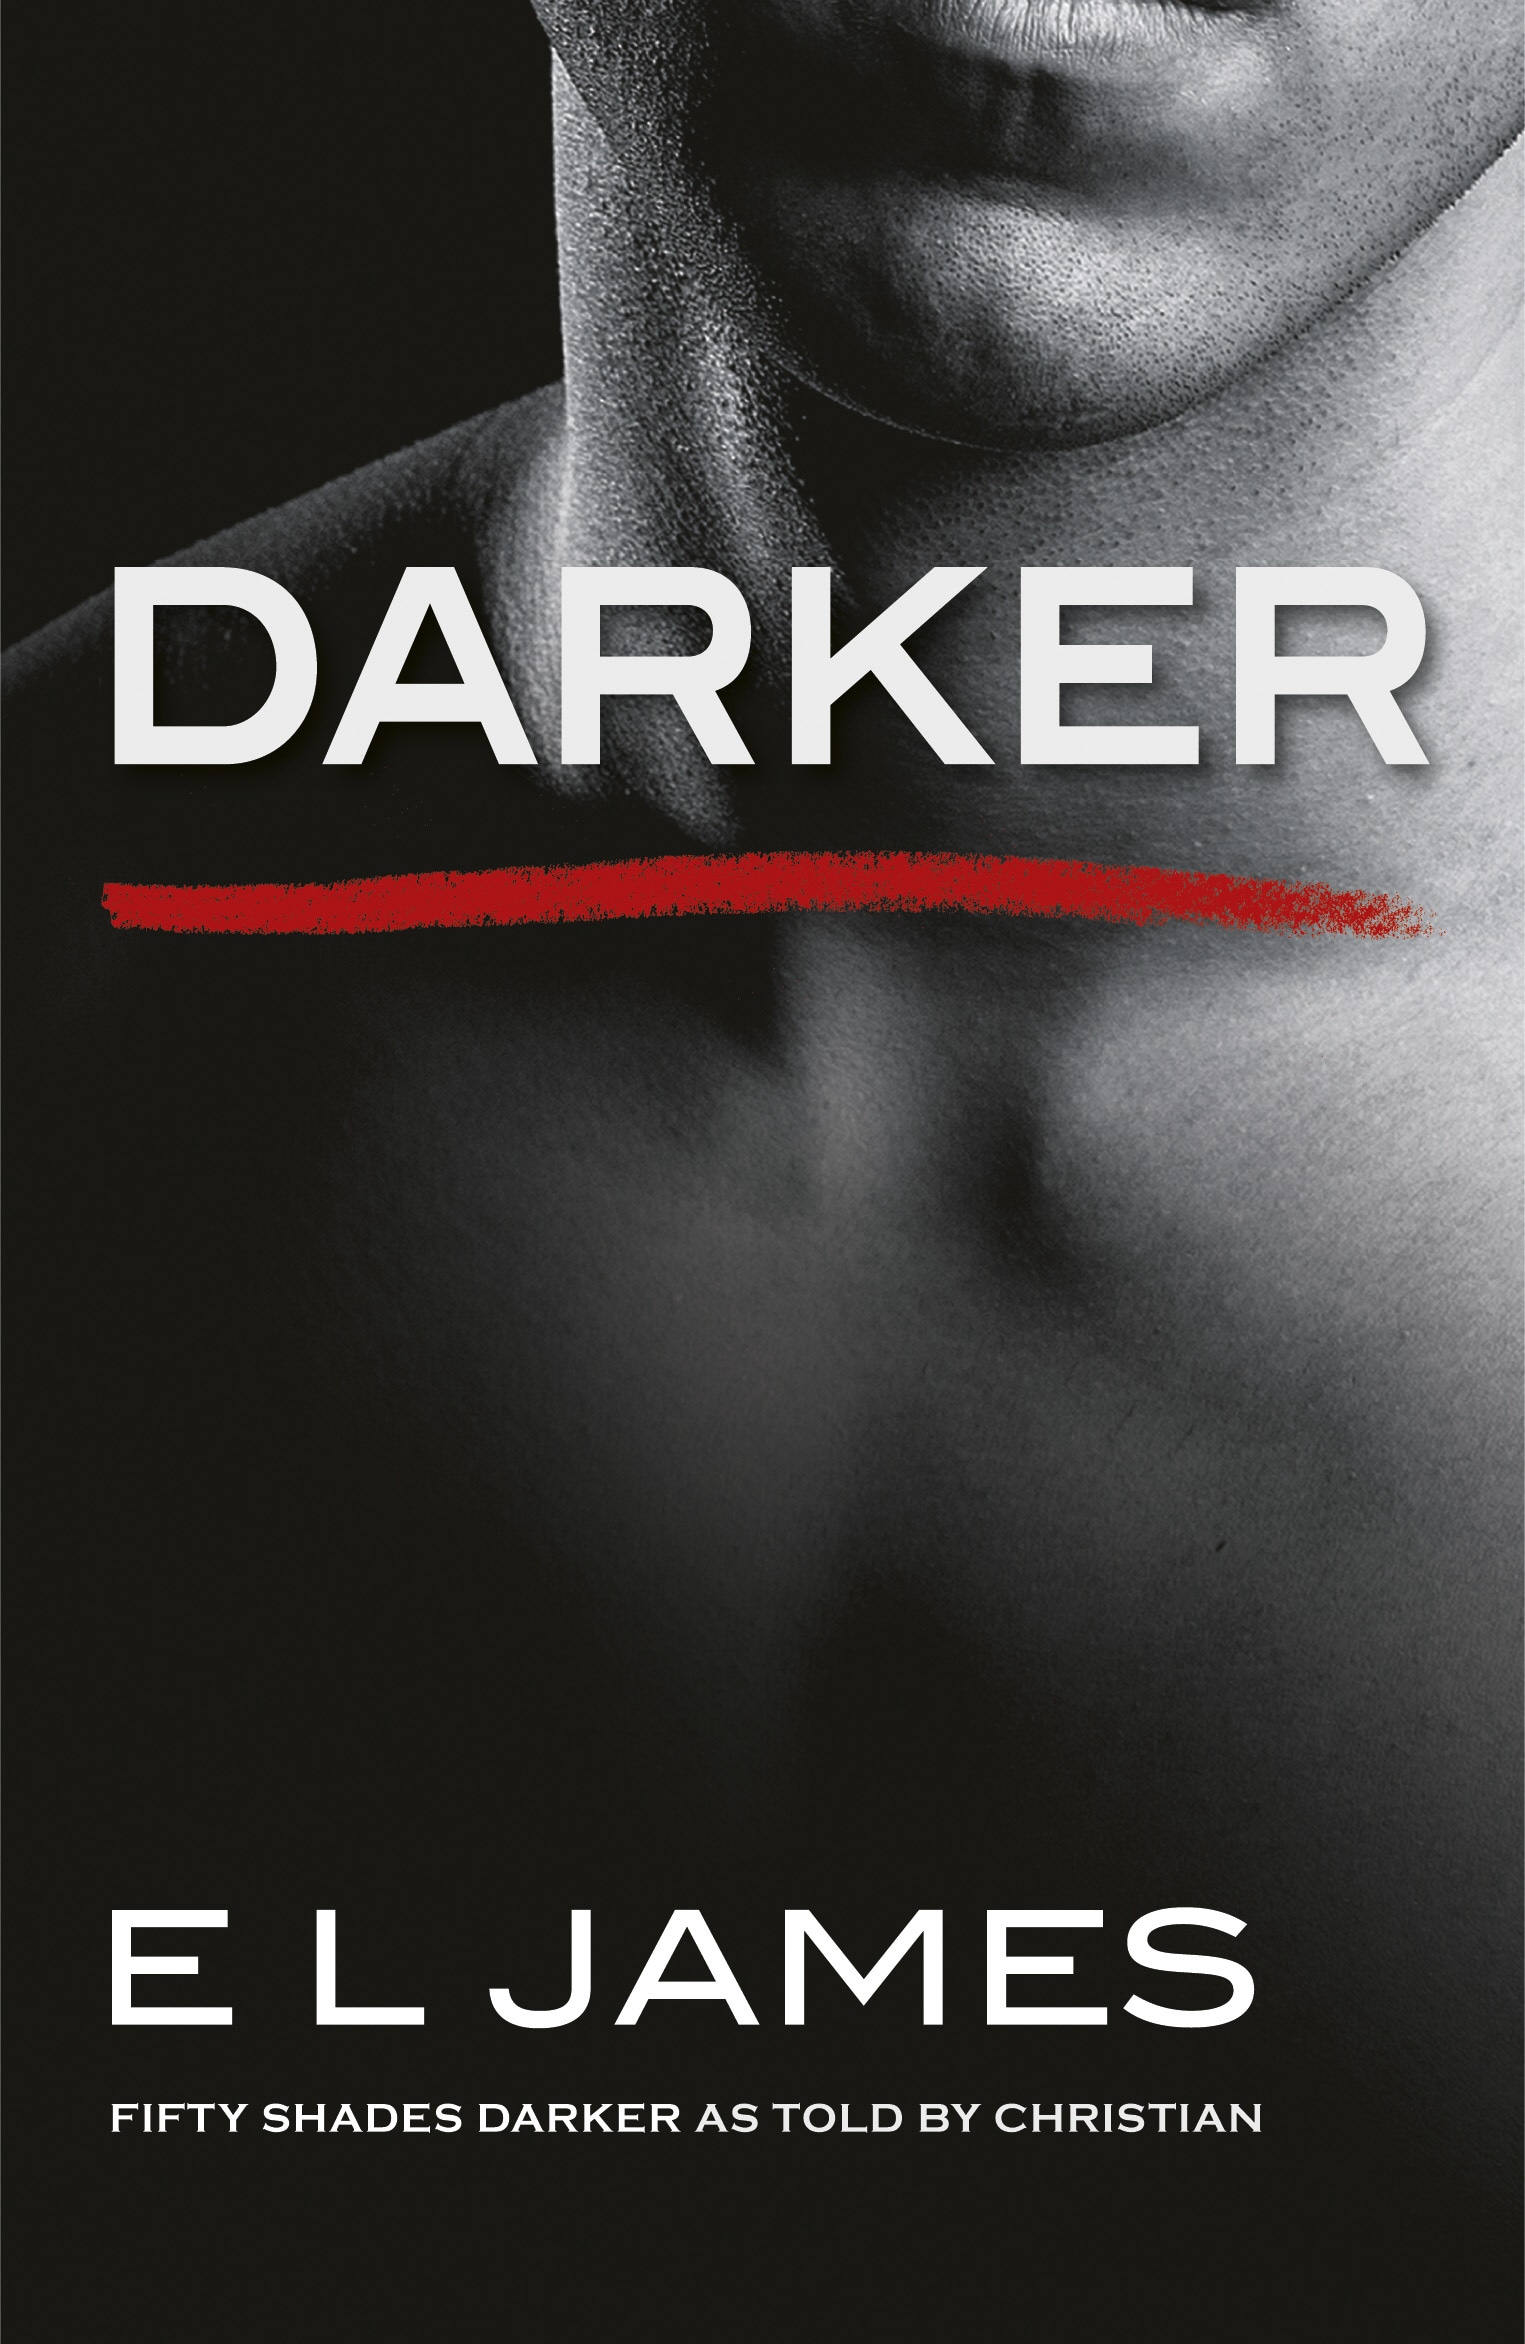 Book “Darker” by E L James — November 28, 2017